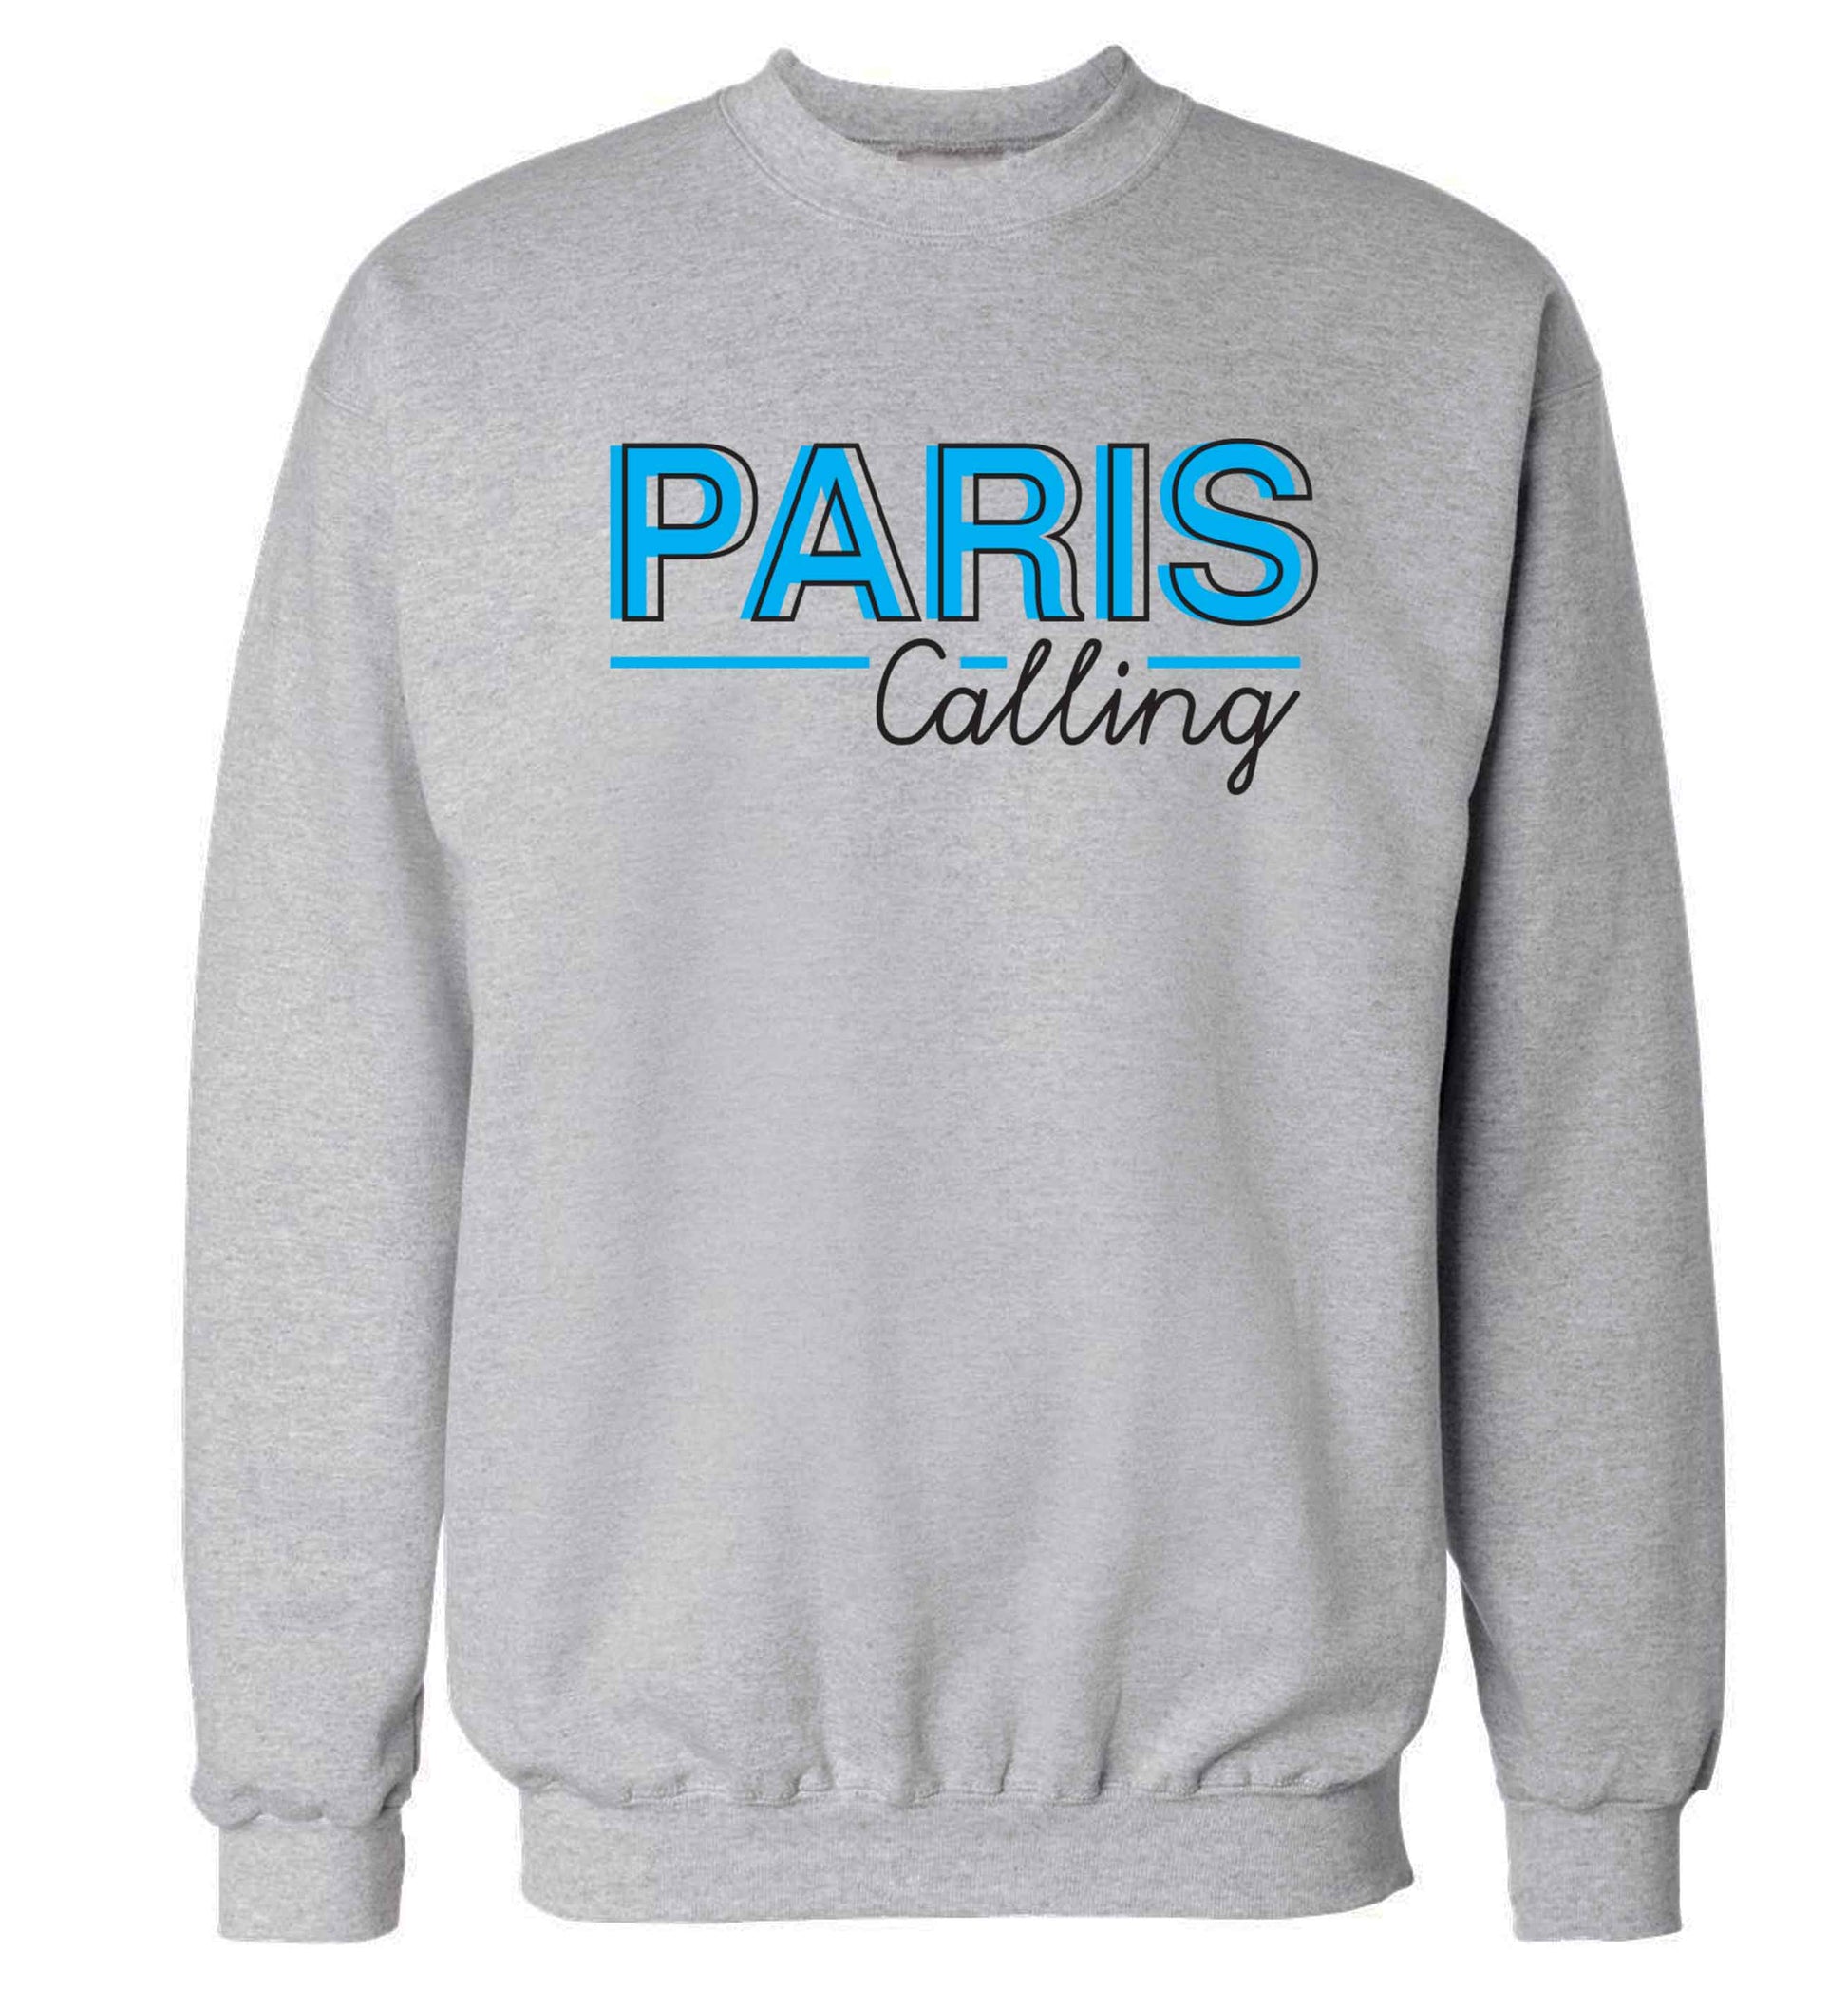 Paris calling Adult's unisex grey Sweater 2XL